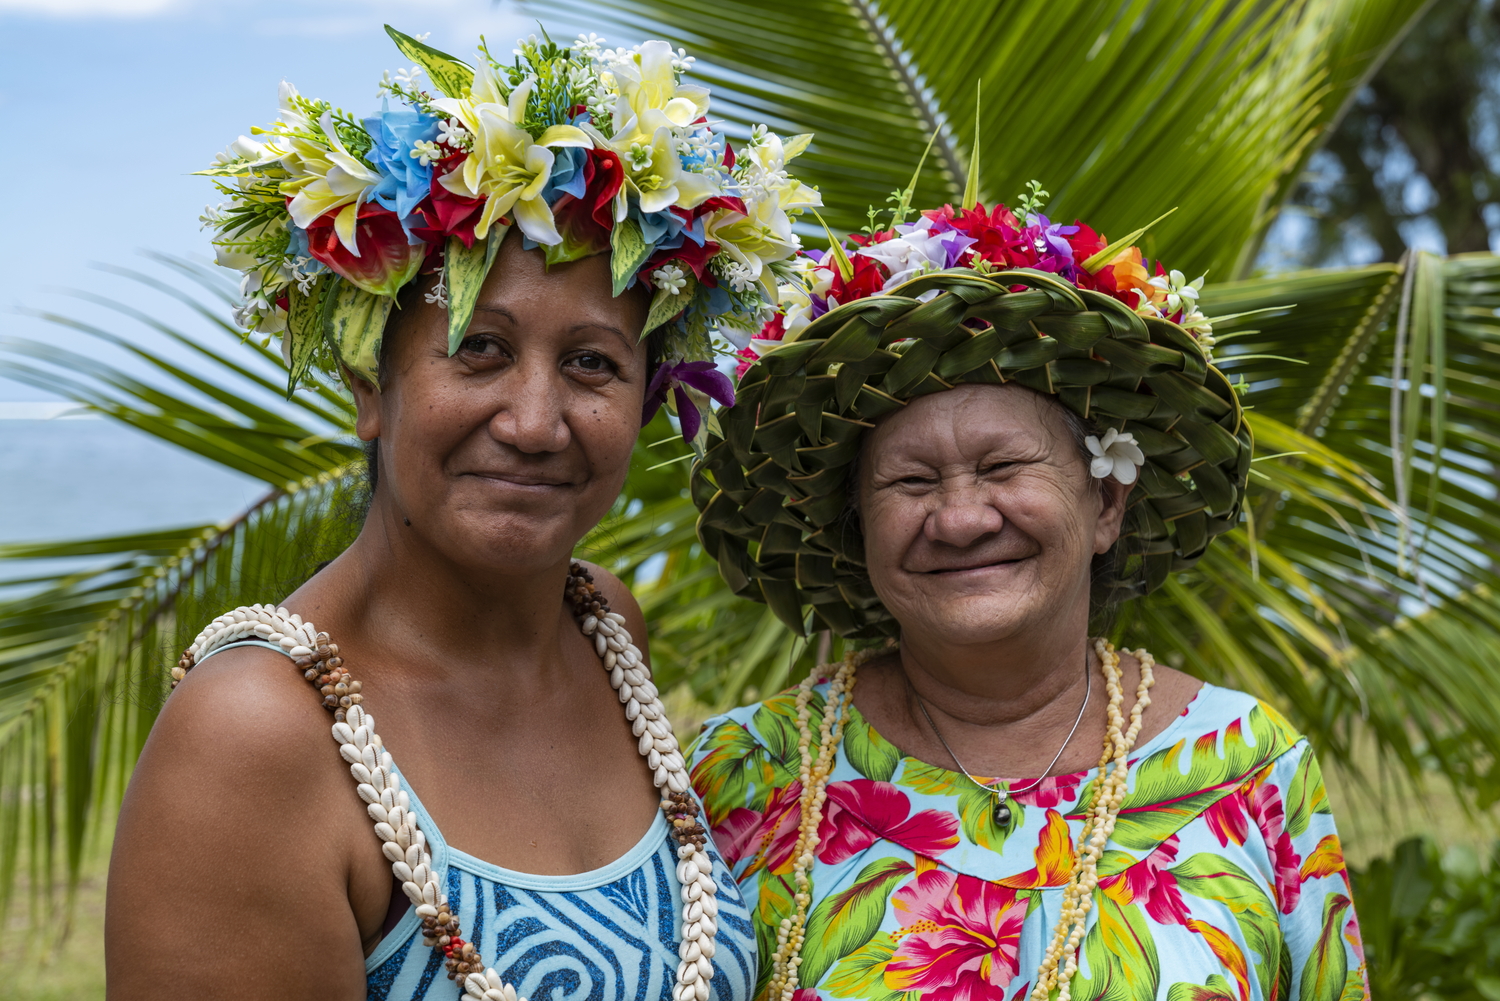 Local ladies of The Islands of Tahiti